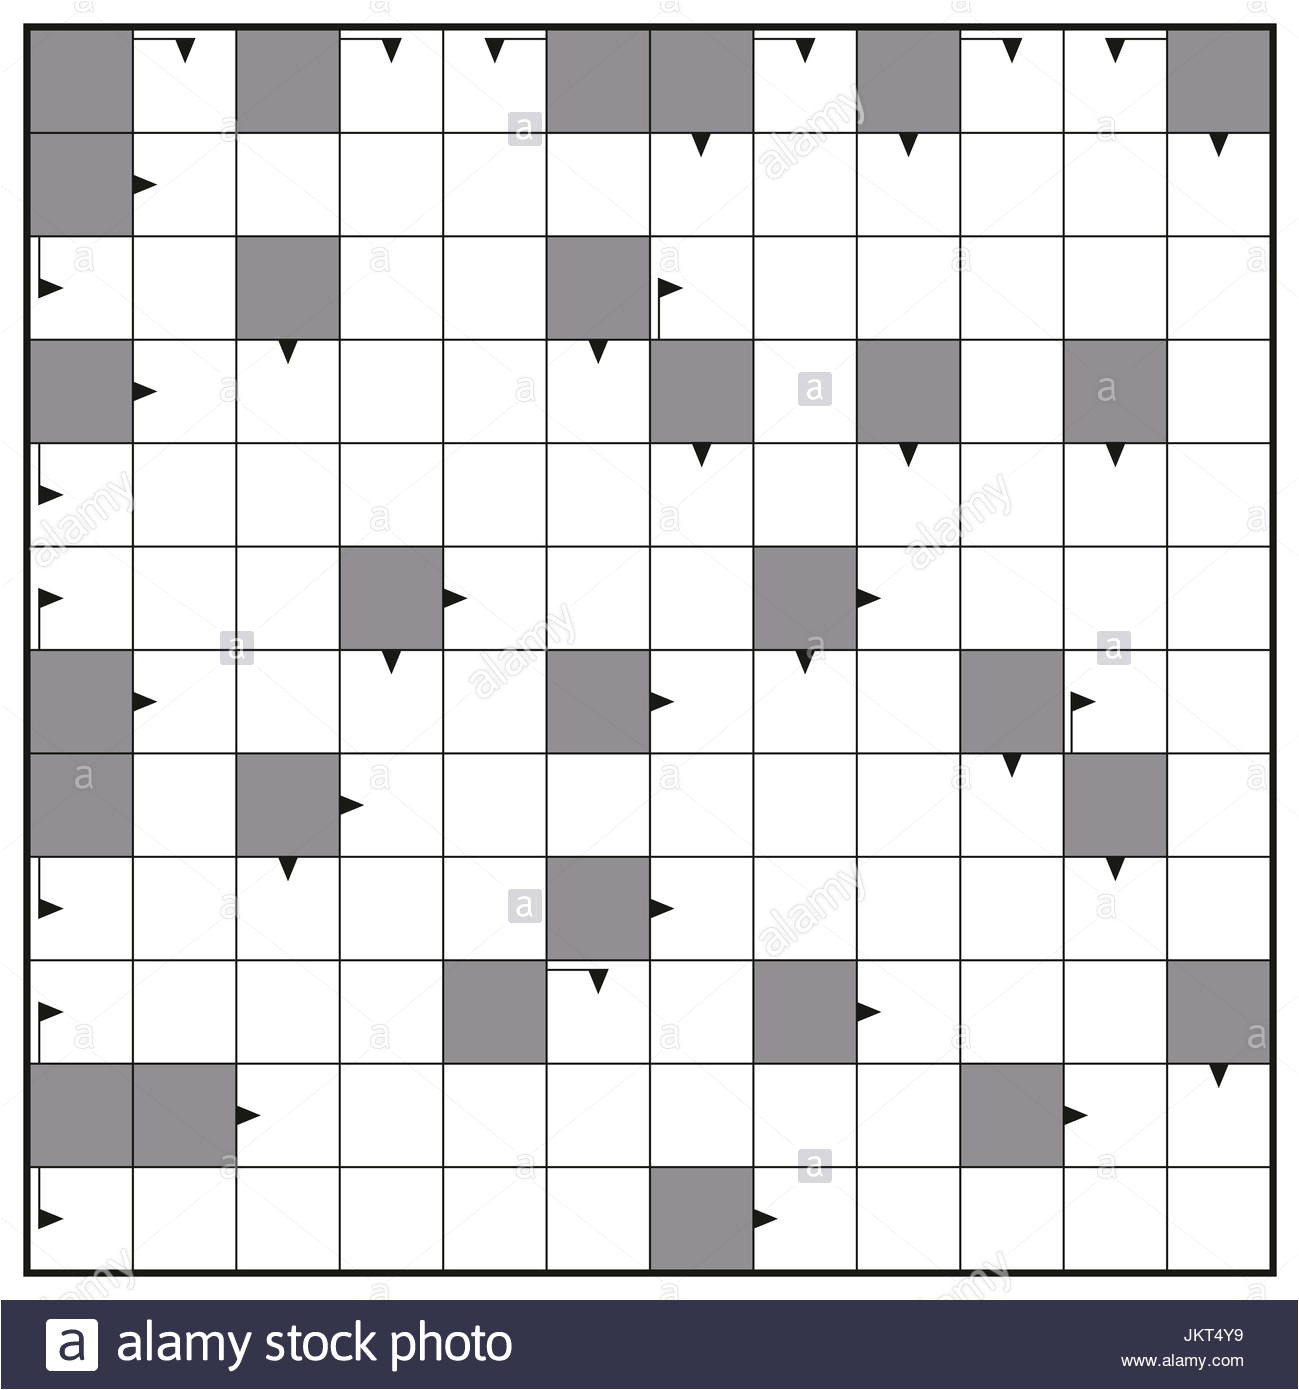 crossword blank crossword puzzle pattern square format template to jkt4y9 jpg